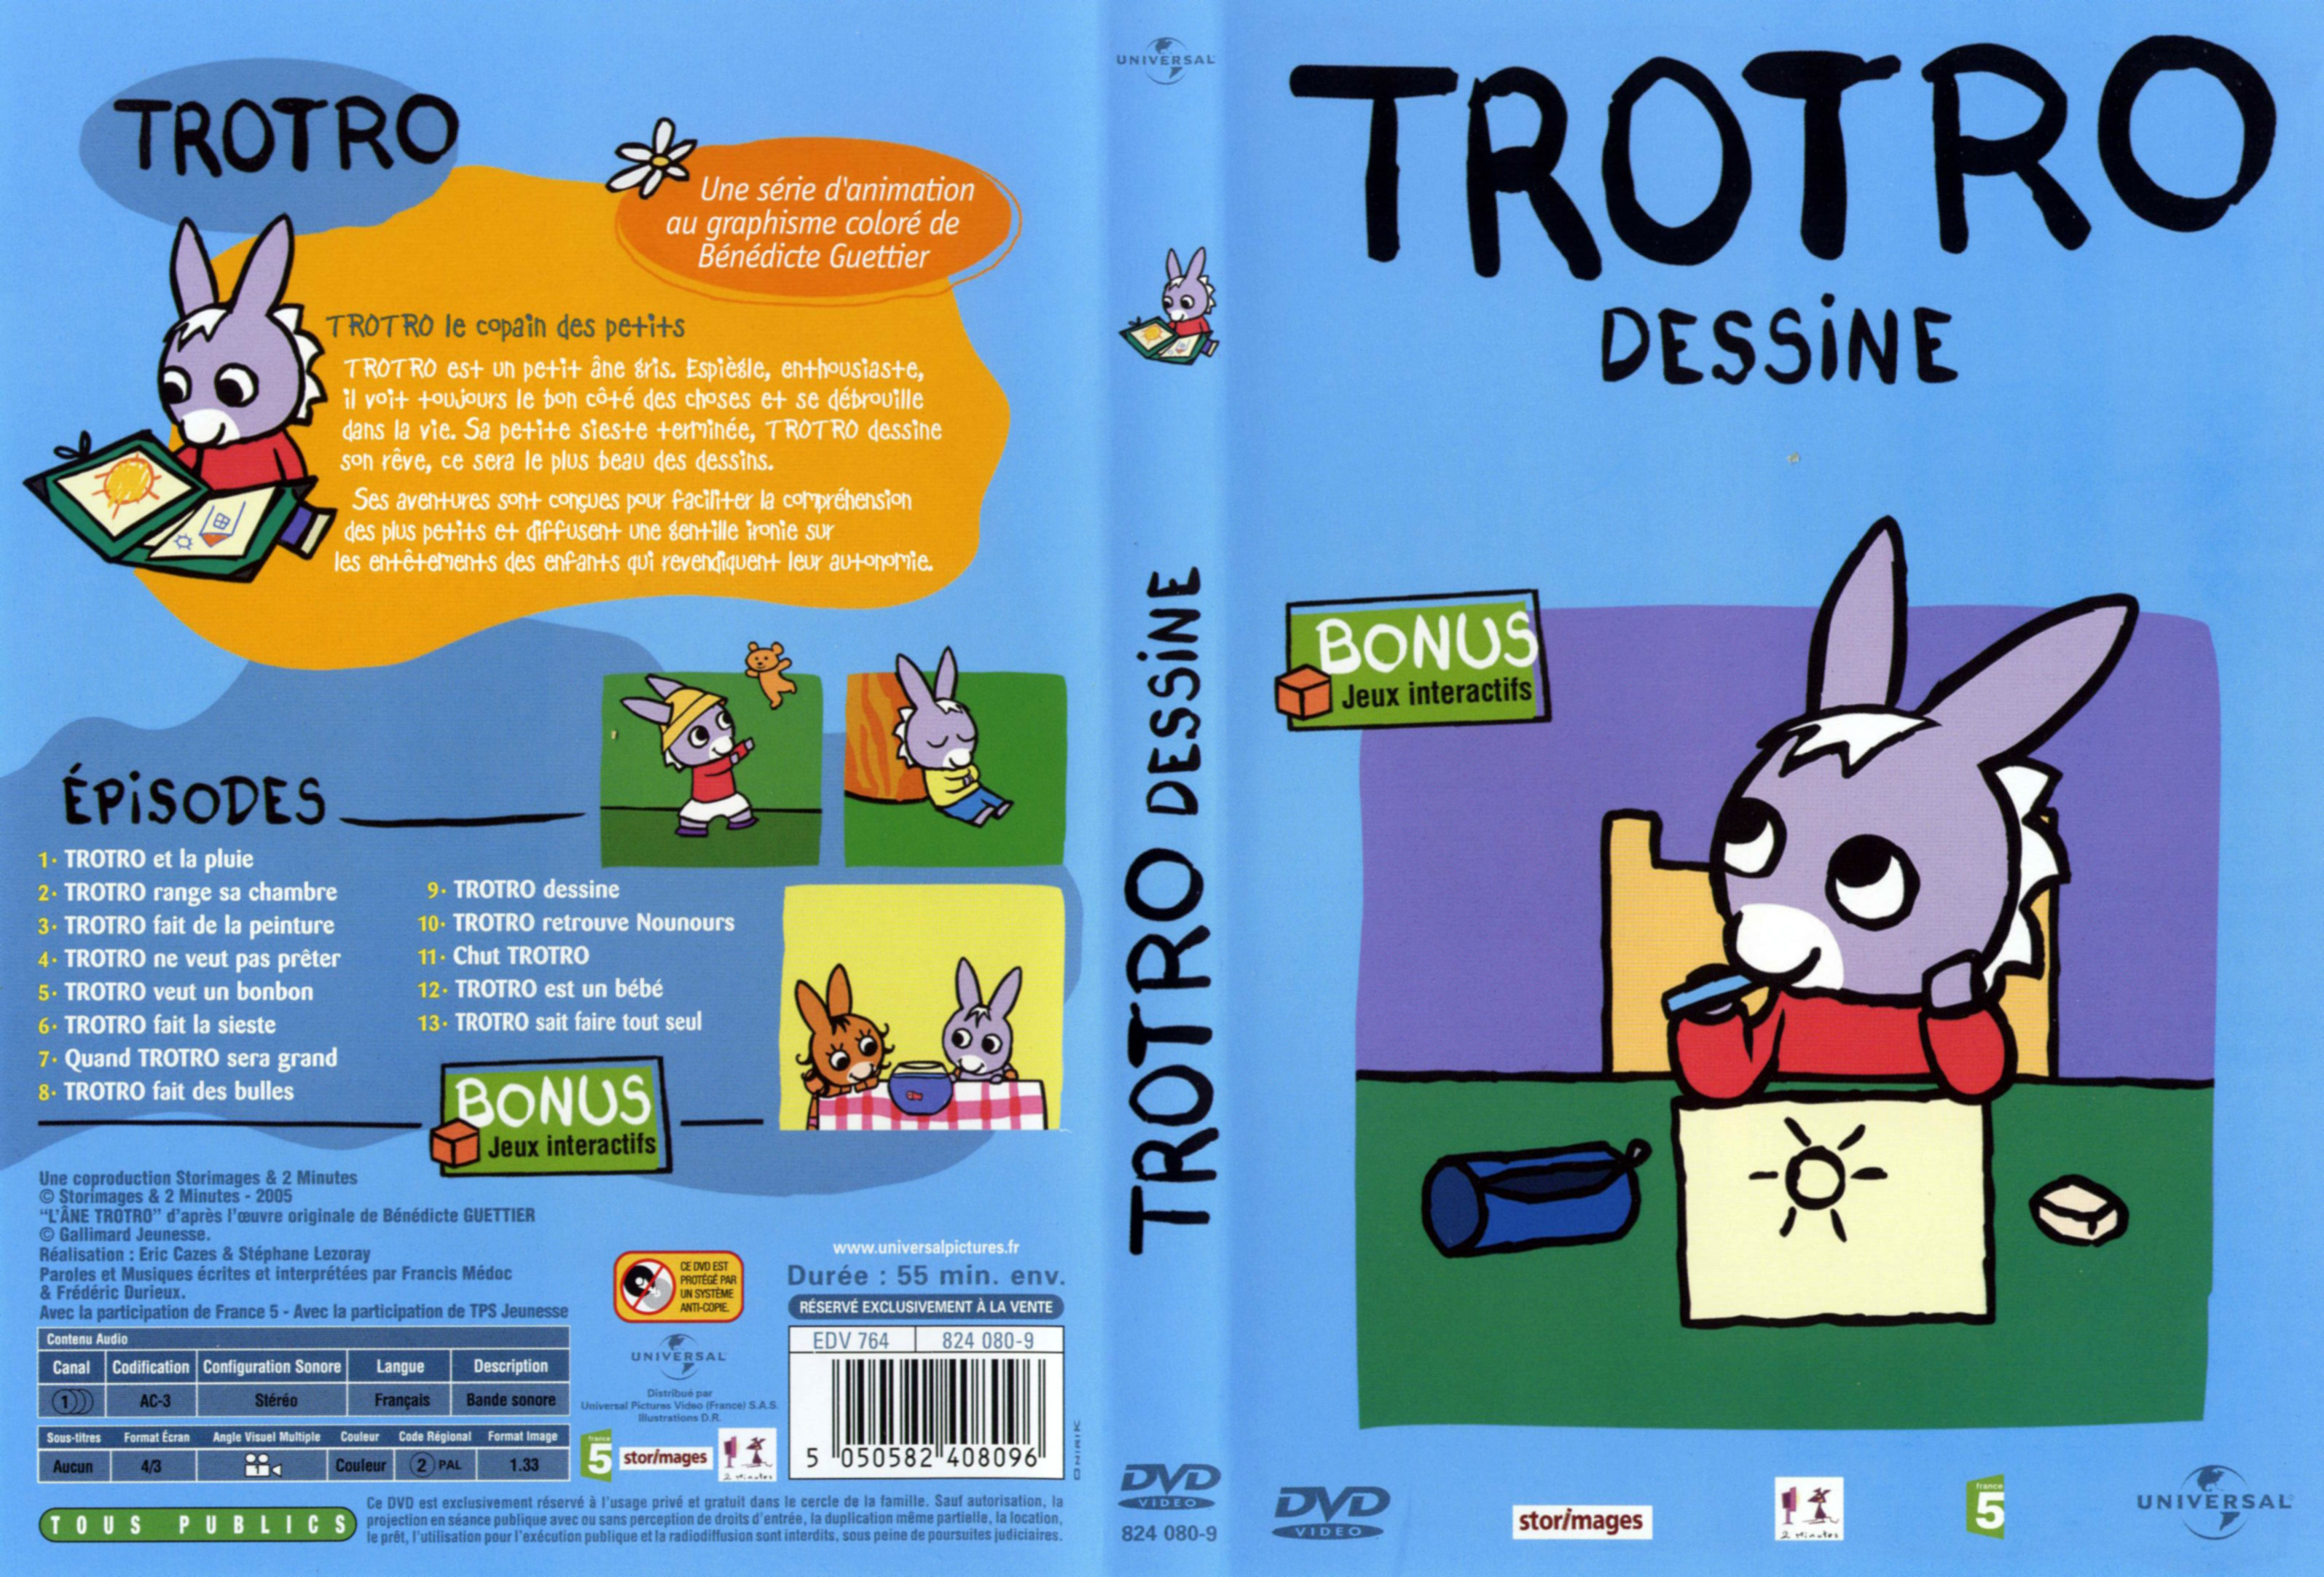 Jaquette DVD Trotro dessine